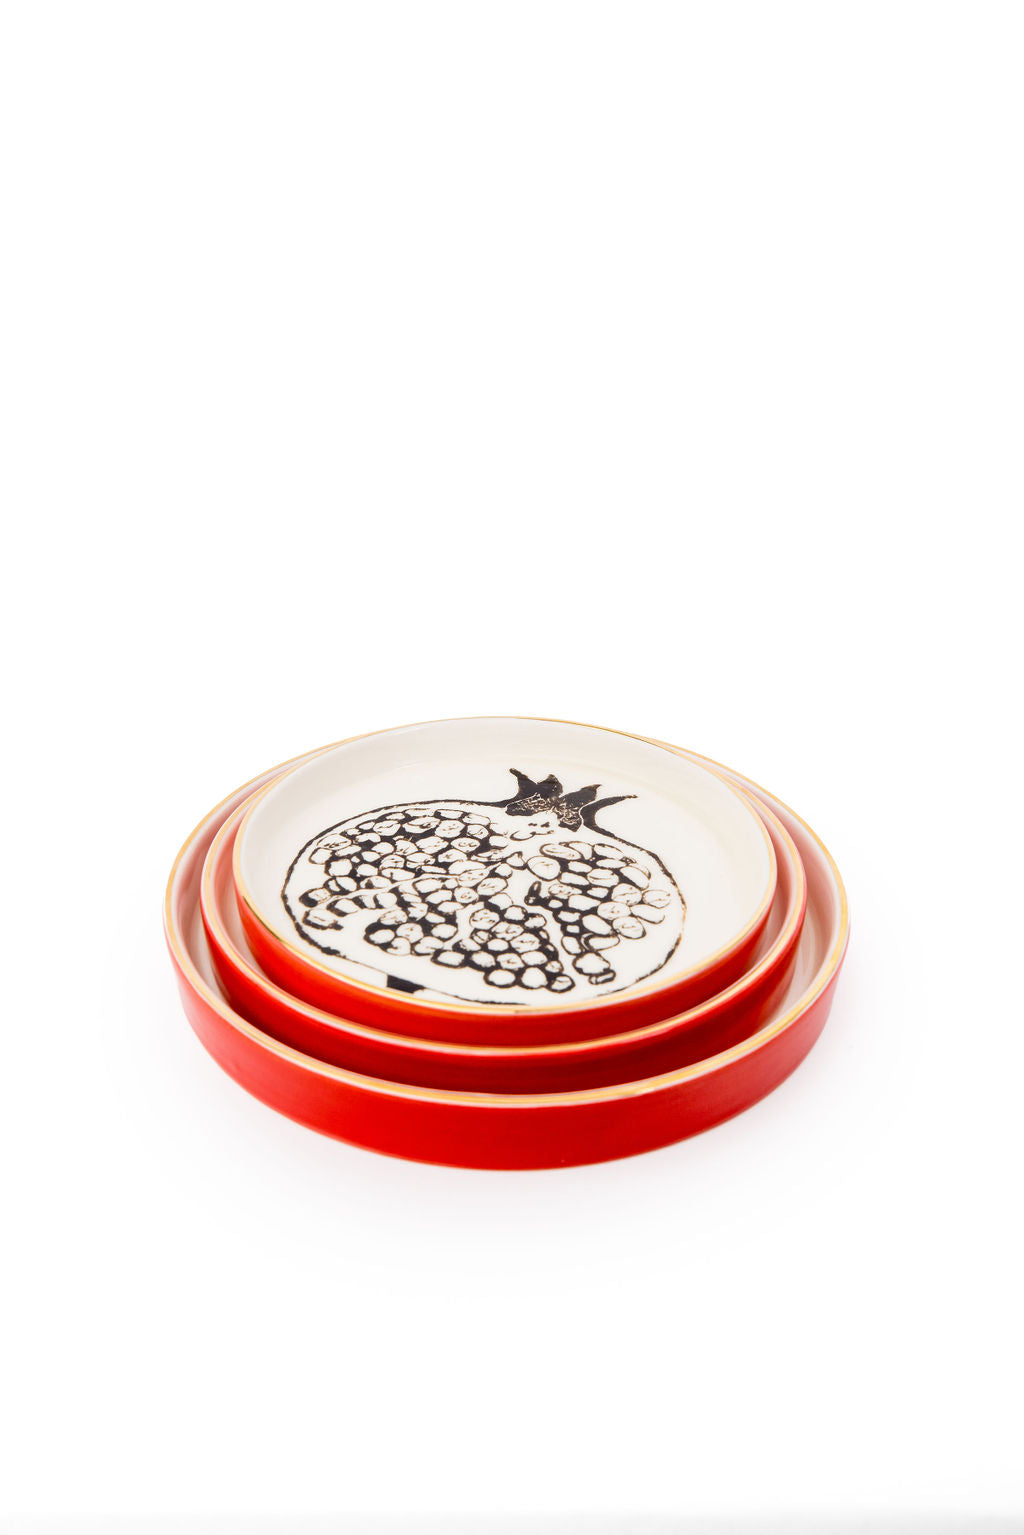 ceramic handmade pomegranate plate set red 